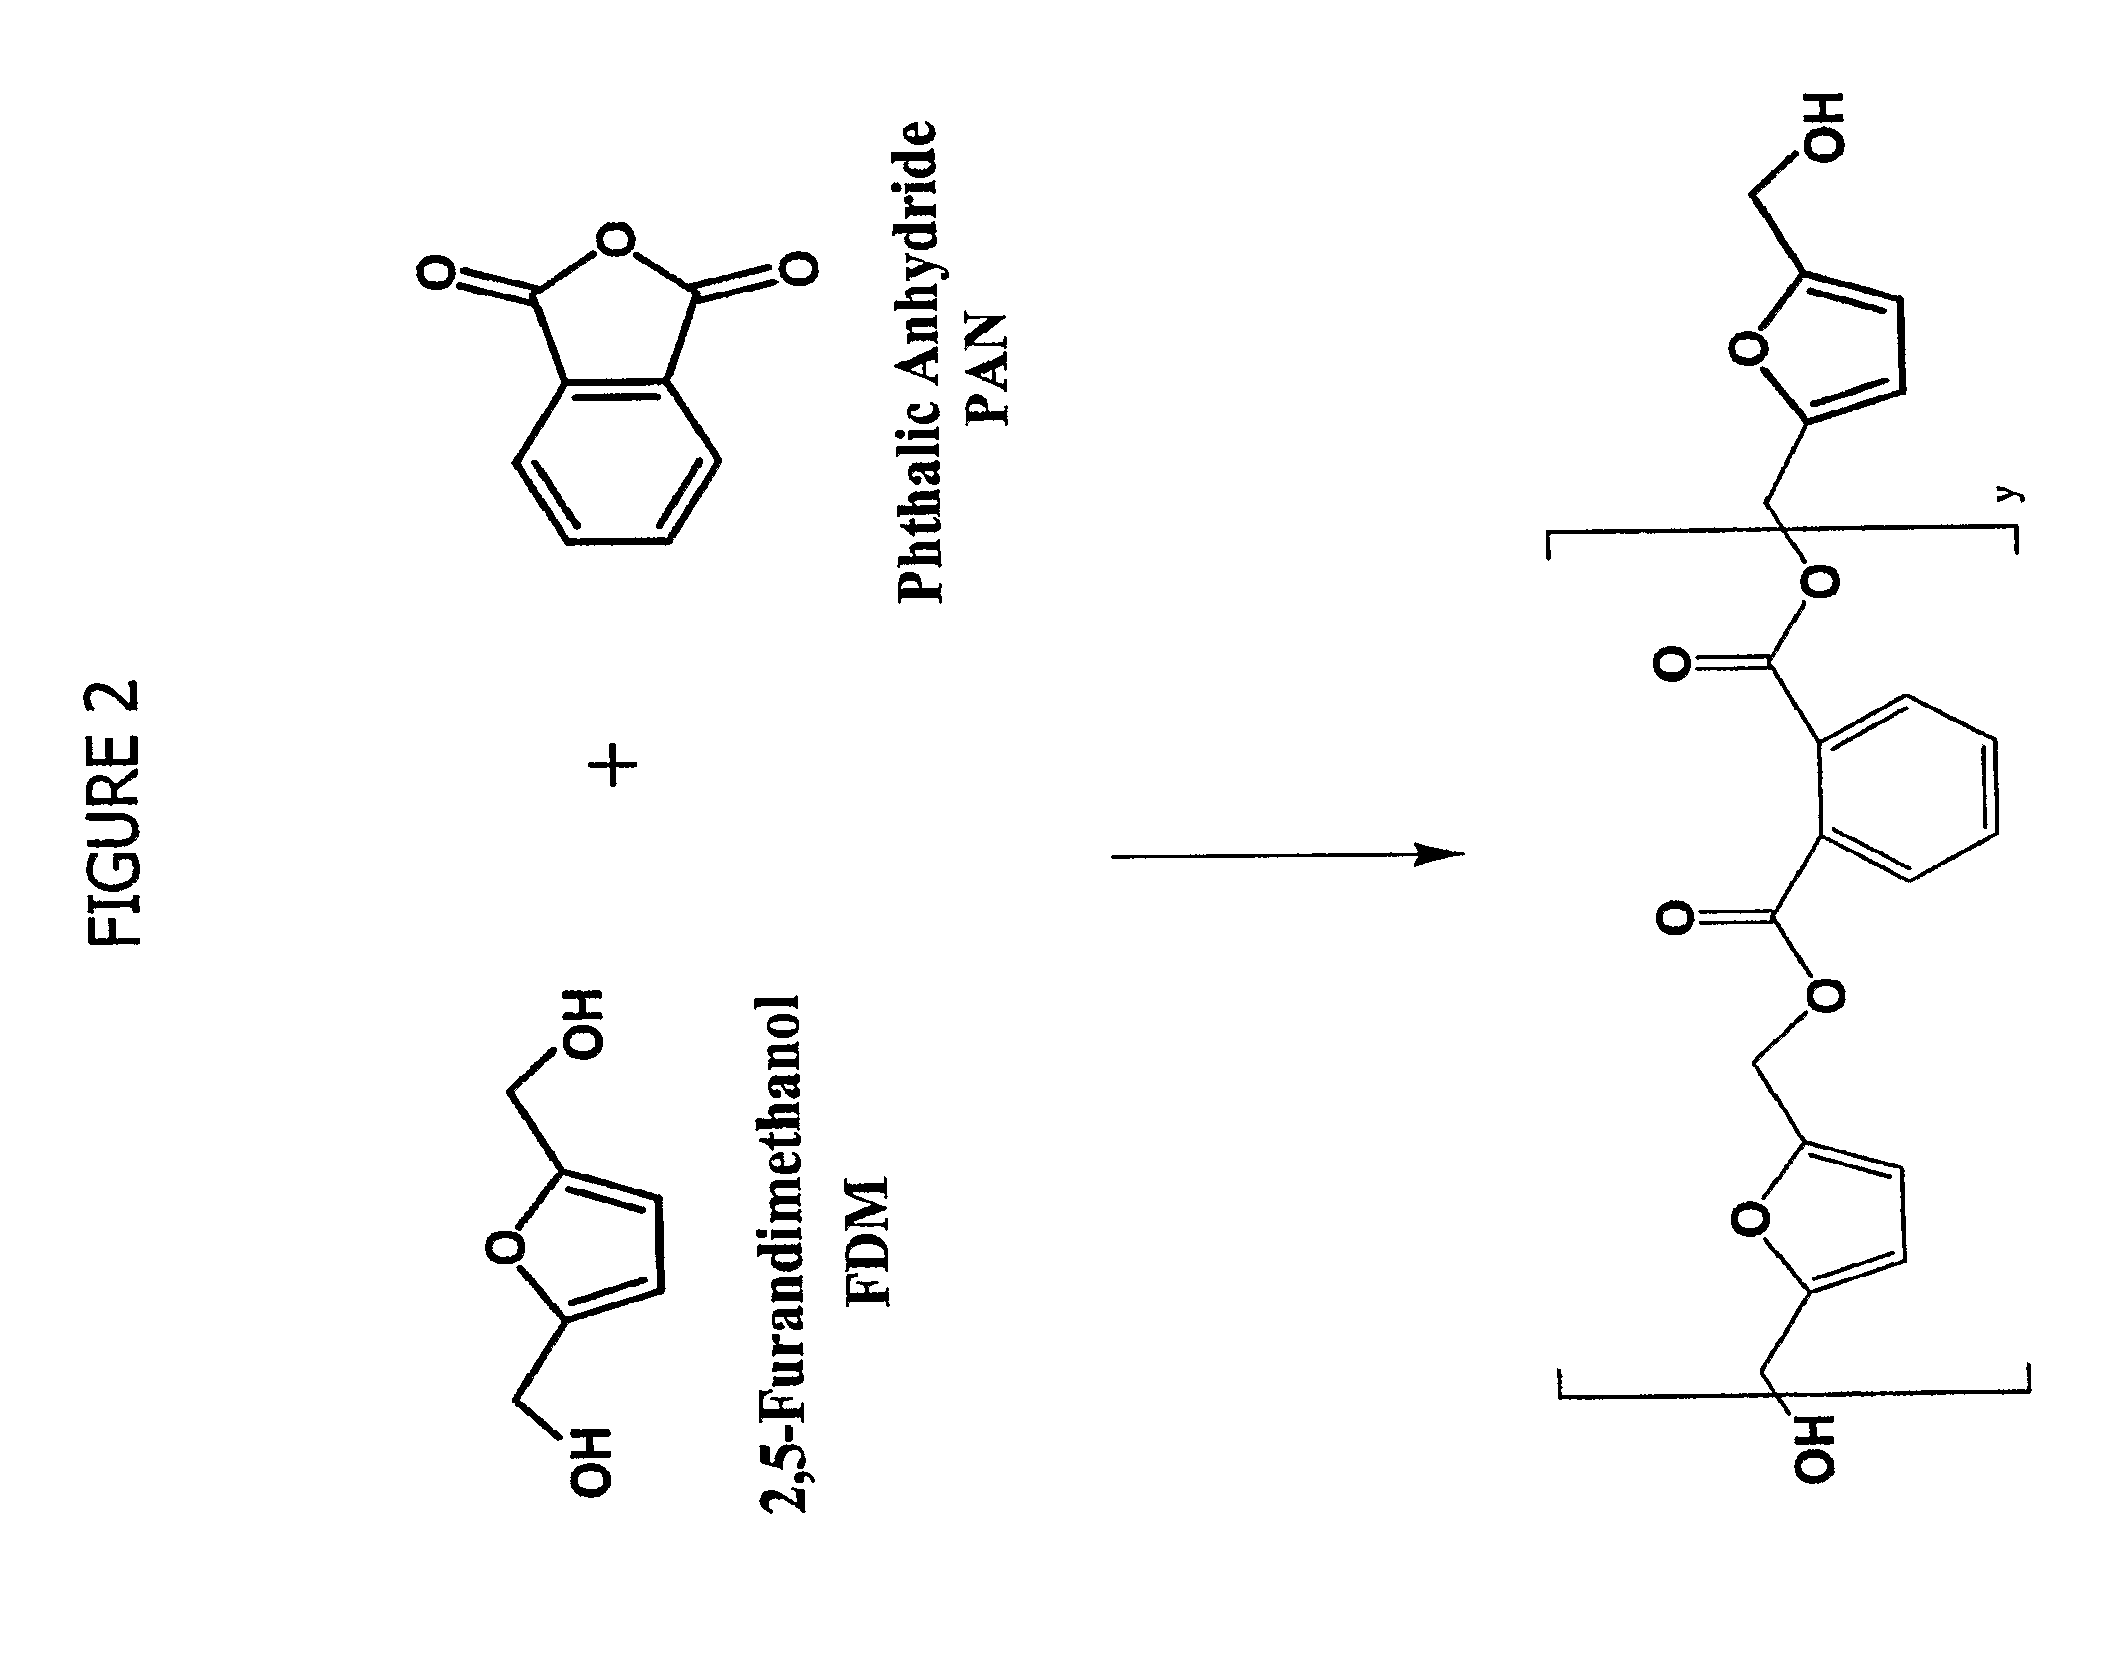 Esters of 5-hydroxymethylfurfural and methods for their preparation